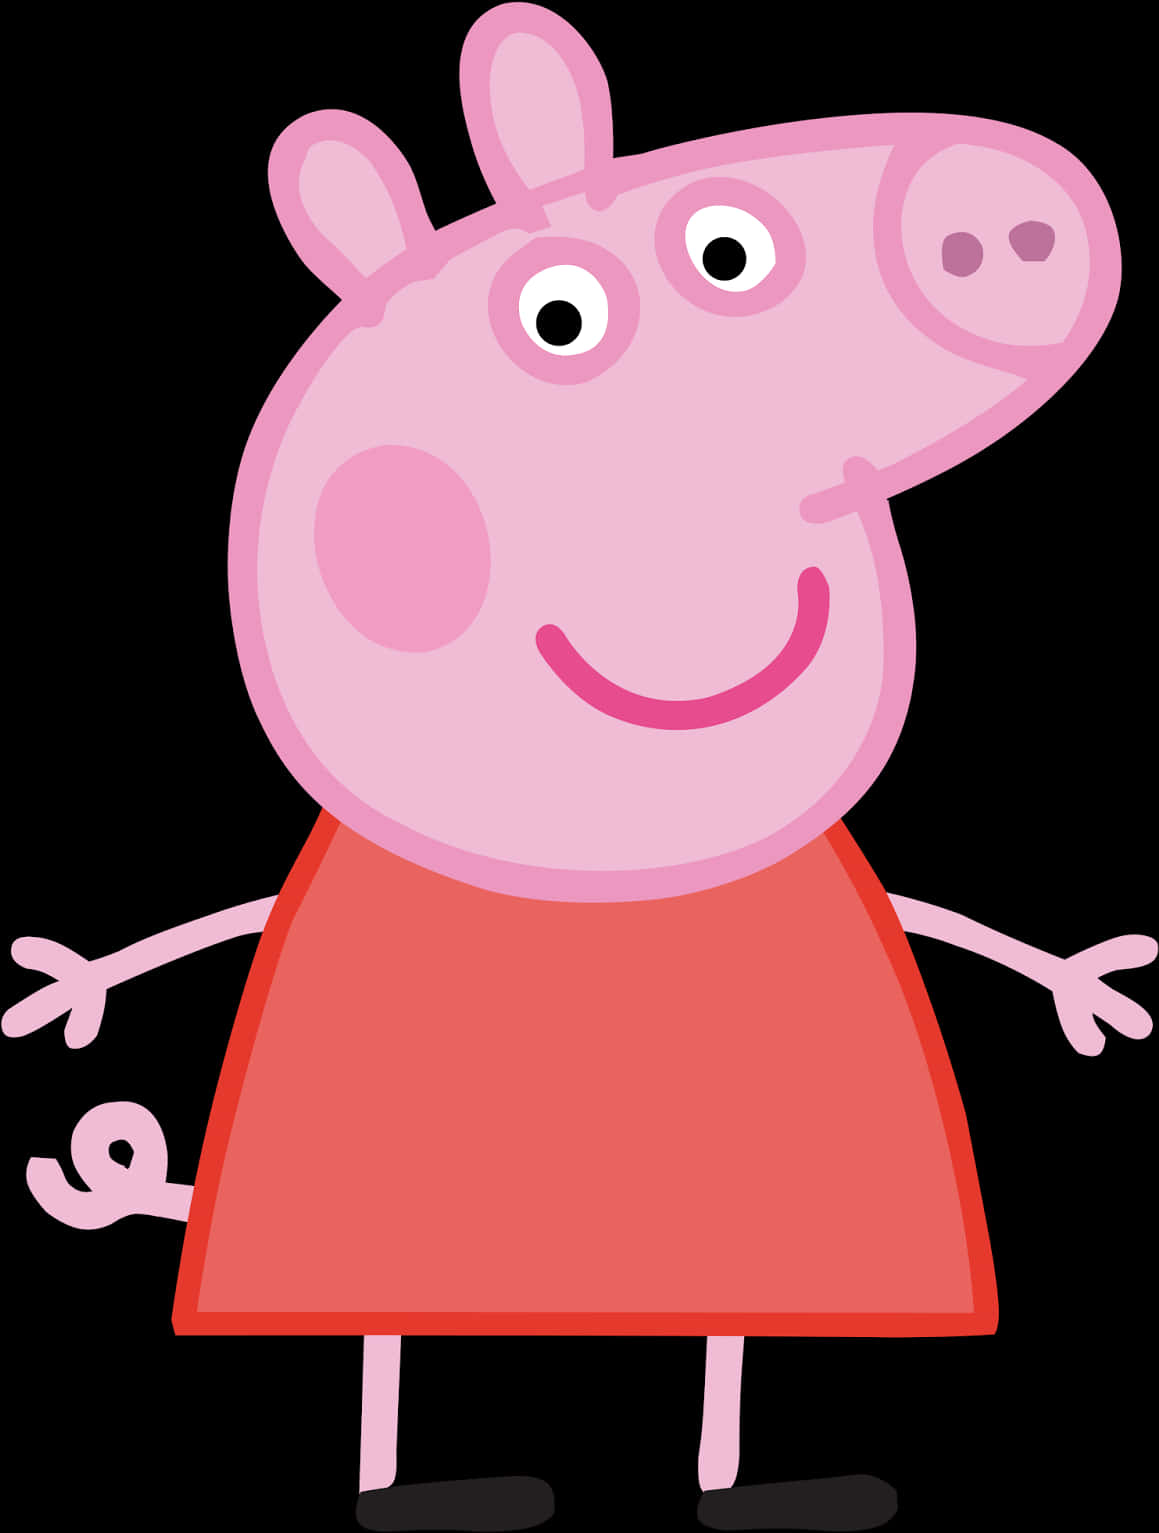 A Cartoon Pig In A Red Dress